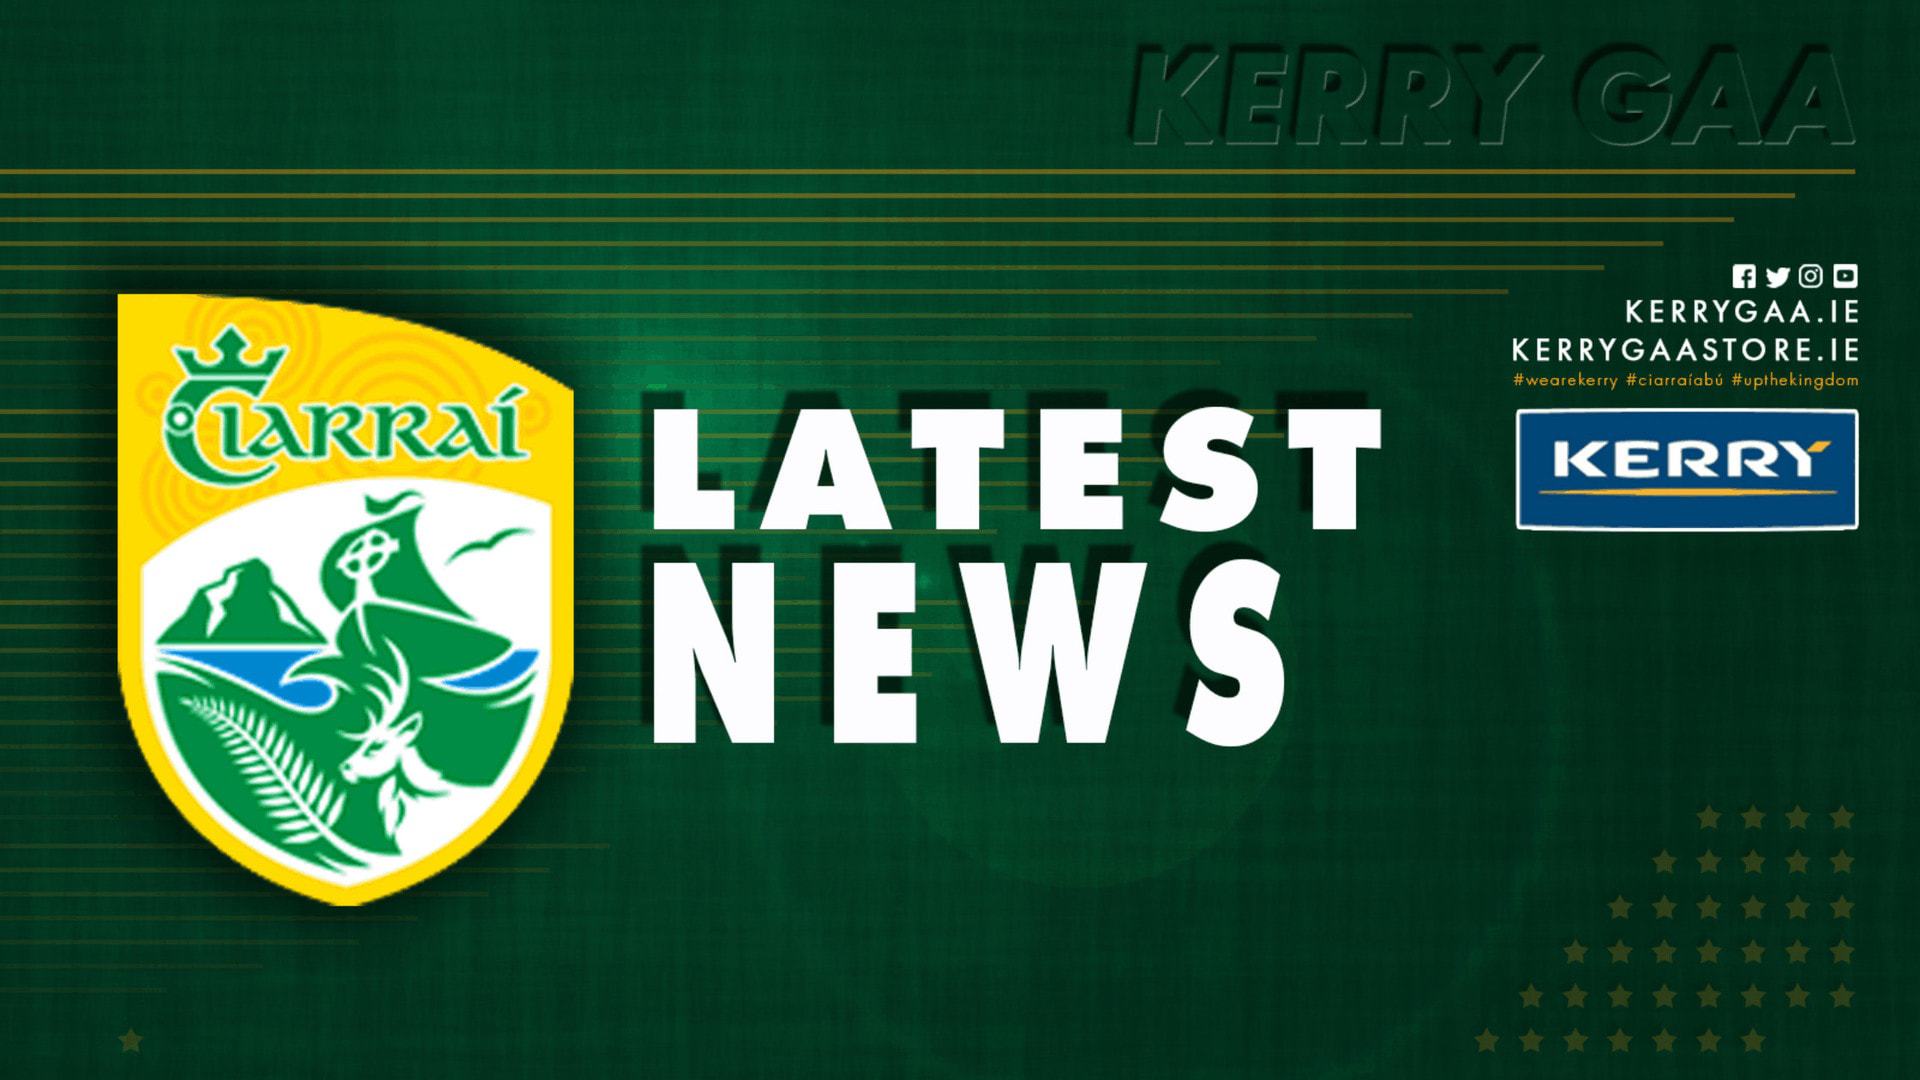 Update from the Kerry GAA County Board Chairman